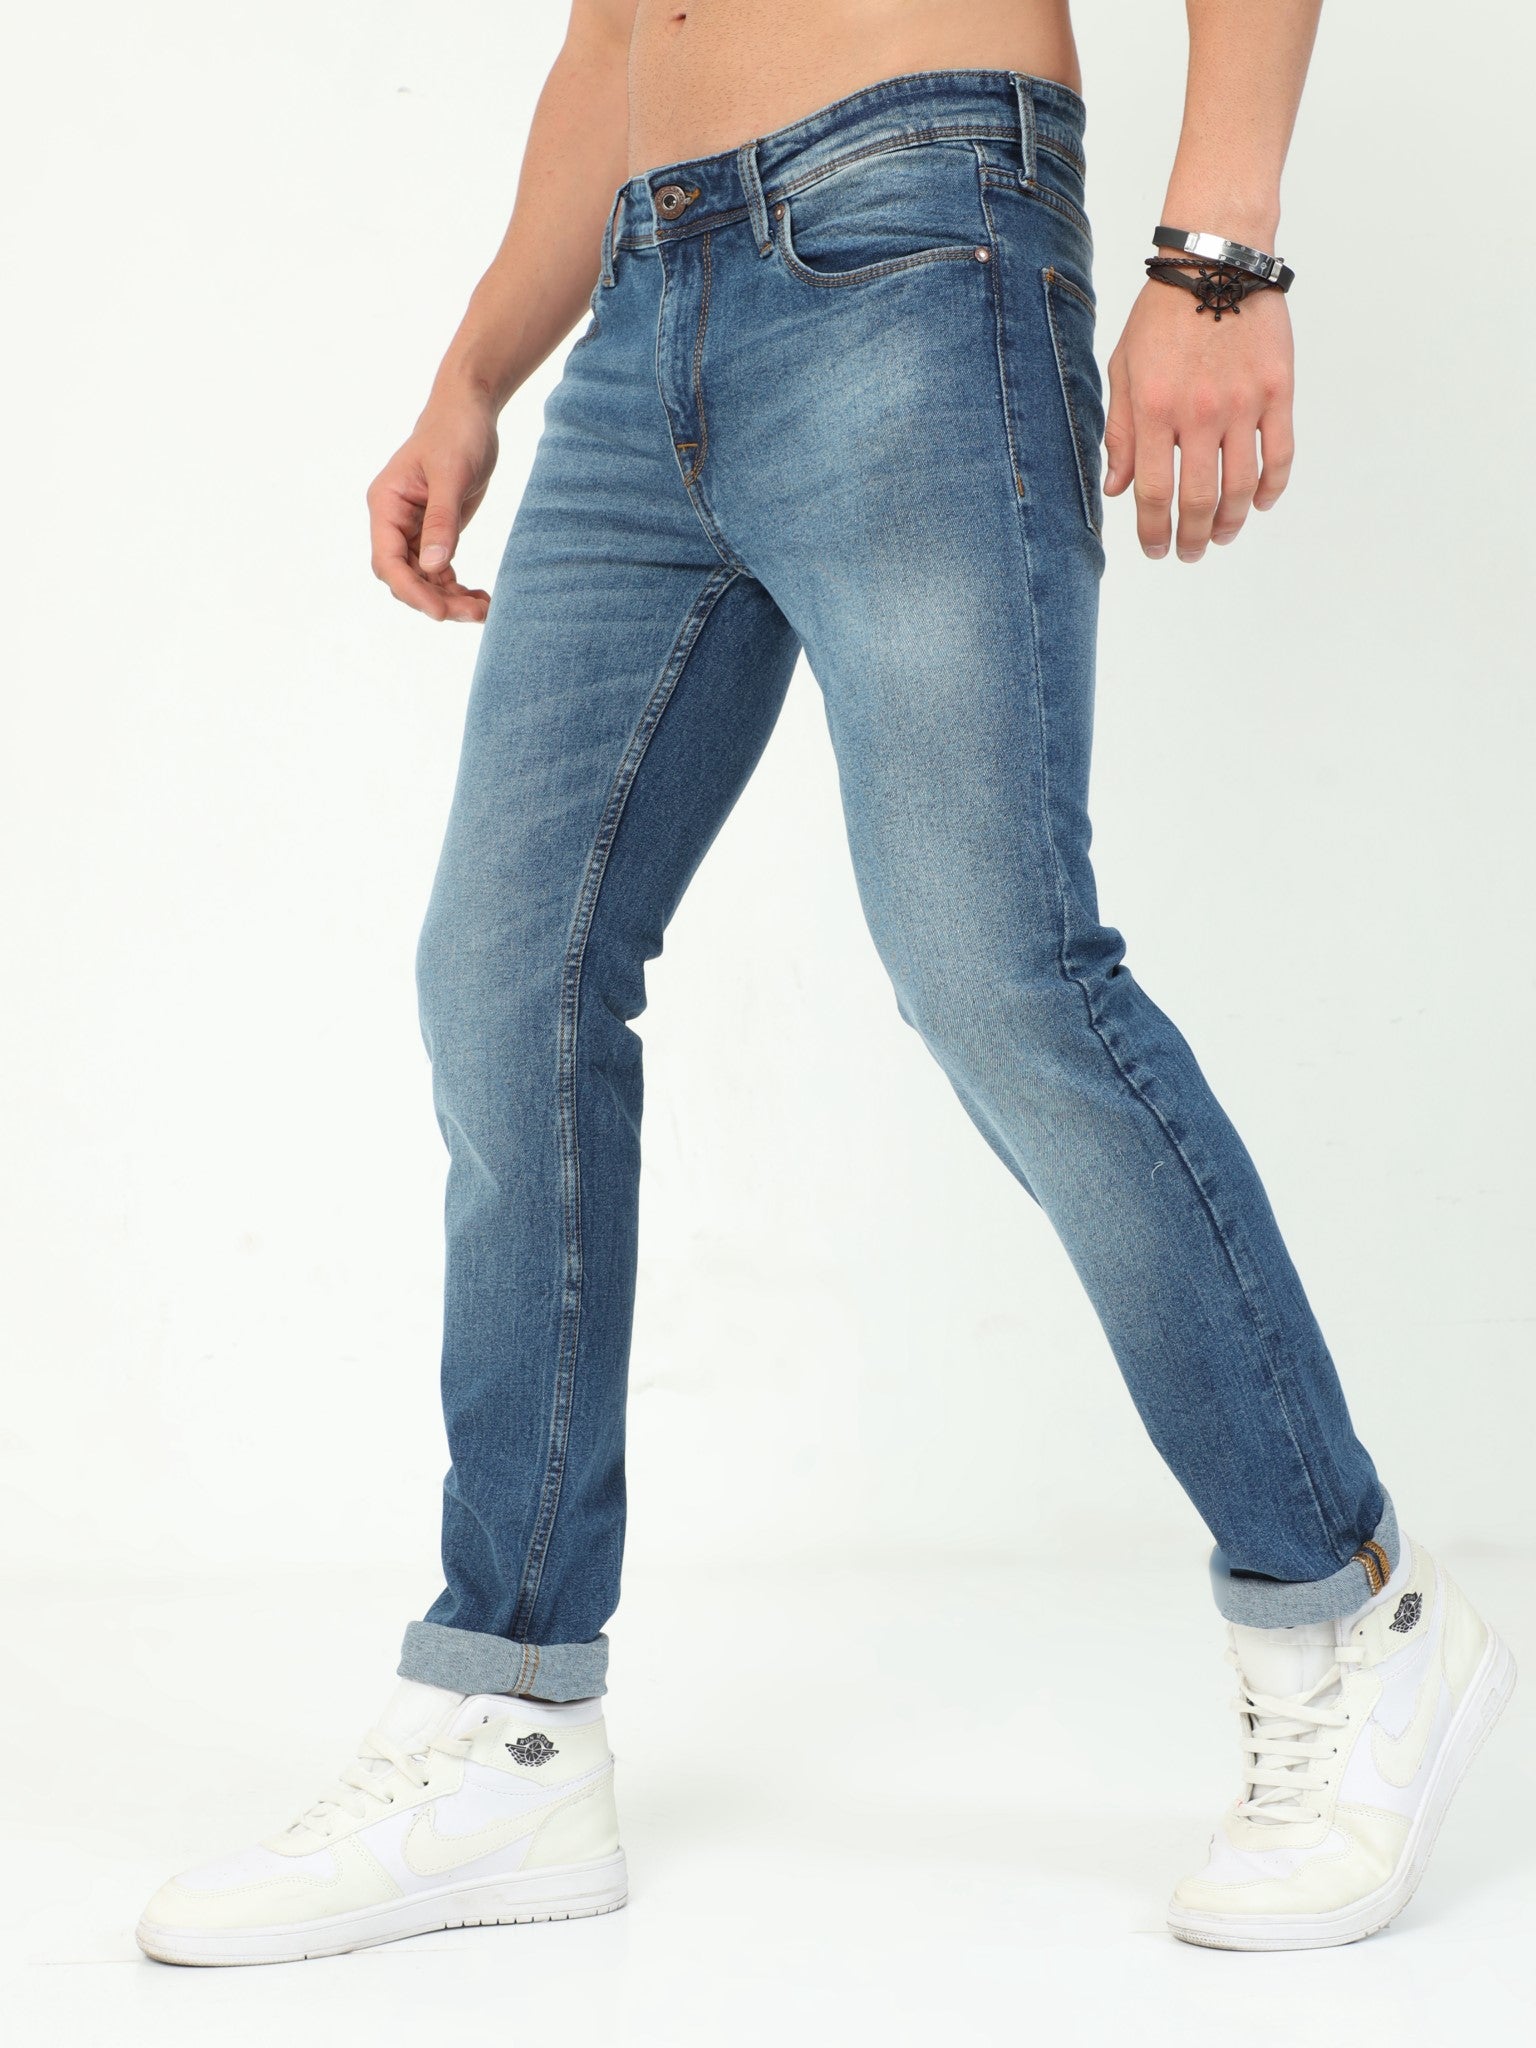 Midblue Slim Fit Jeans for Men